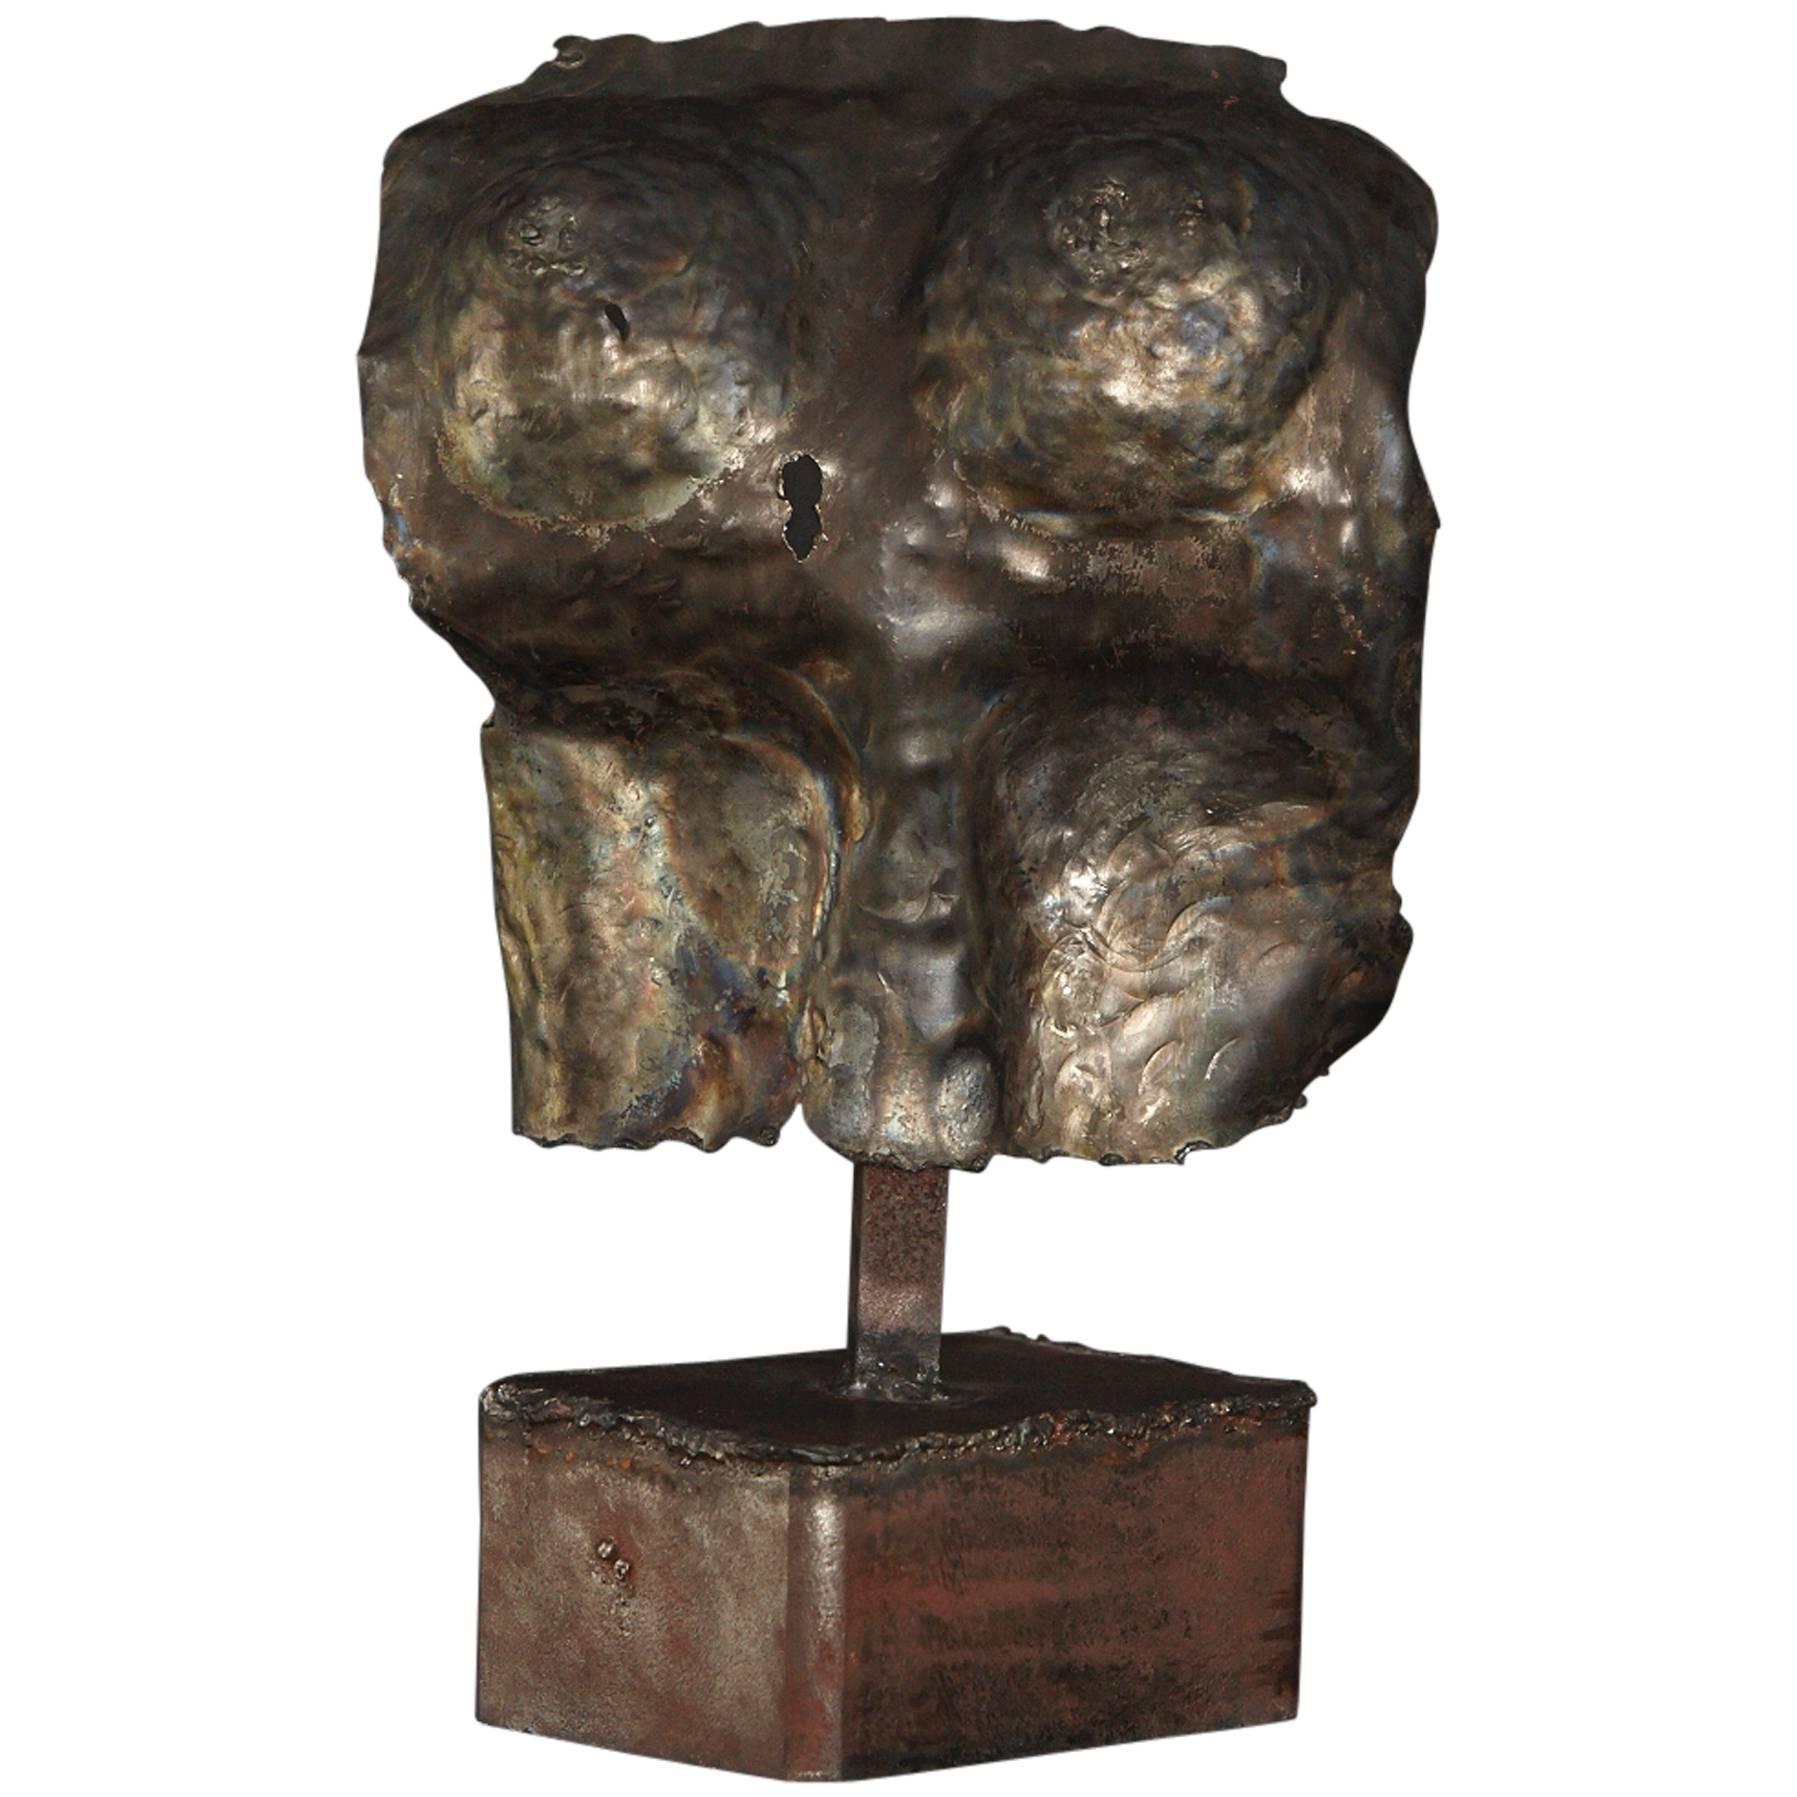 Brutalist Style Bronze Sculpture of a Female Torso